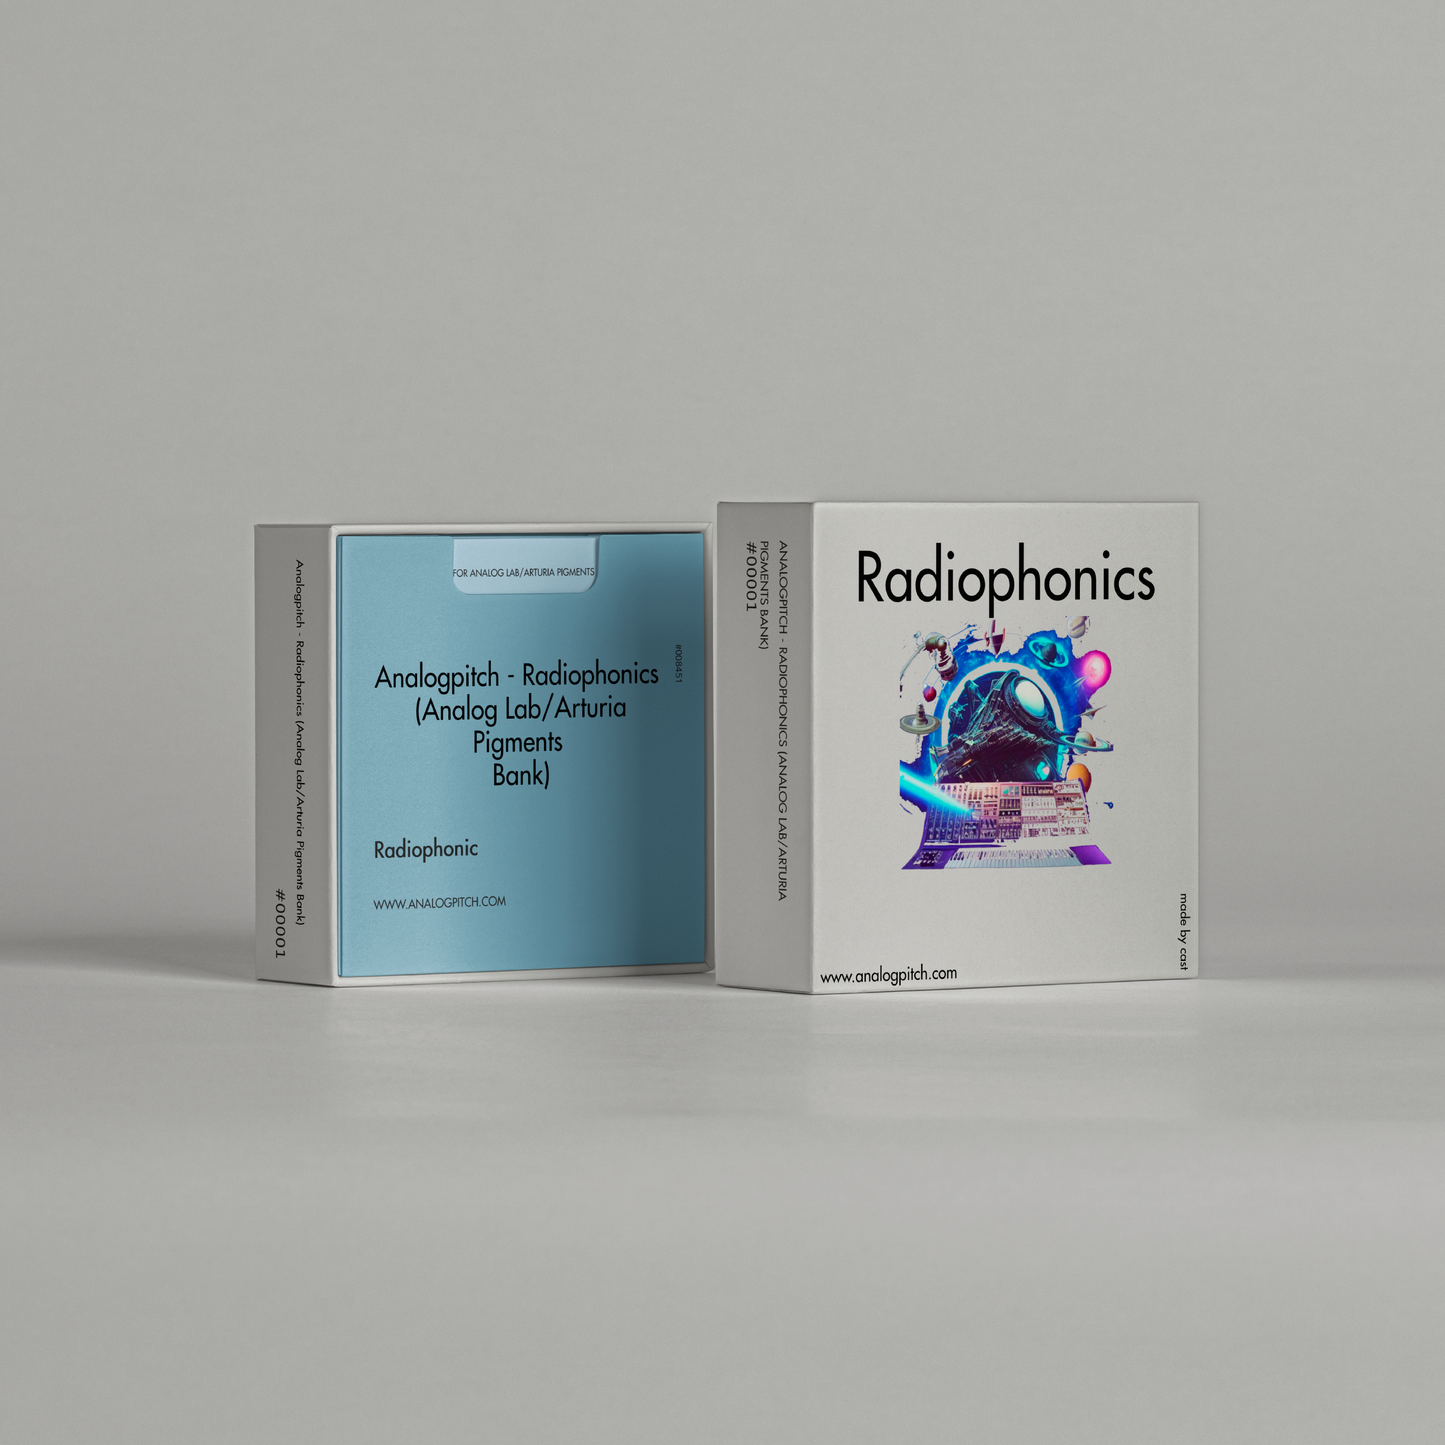 Analogpitch - Radiophonics (Analog Lab/Arturia Pigments Bank)